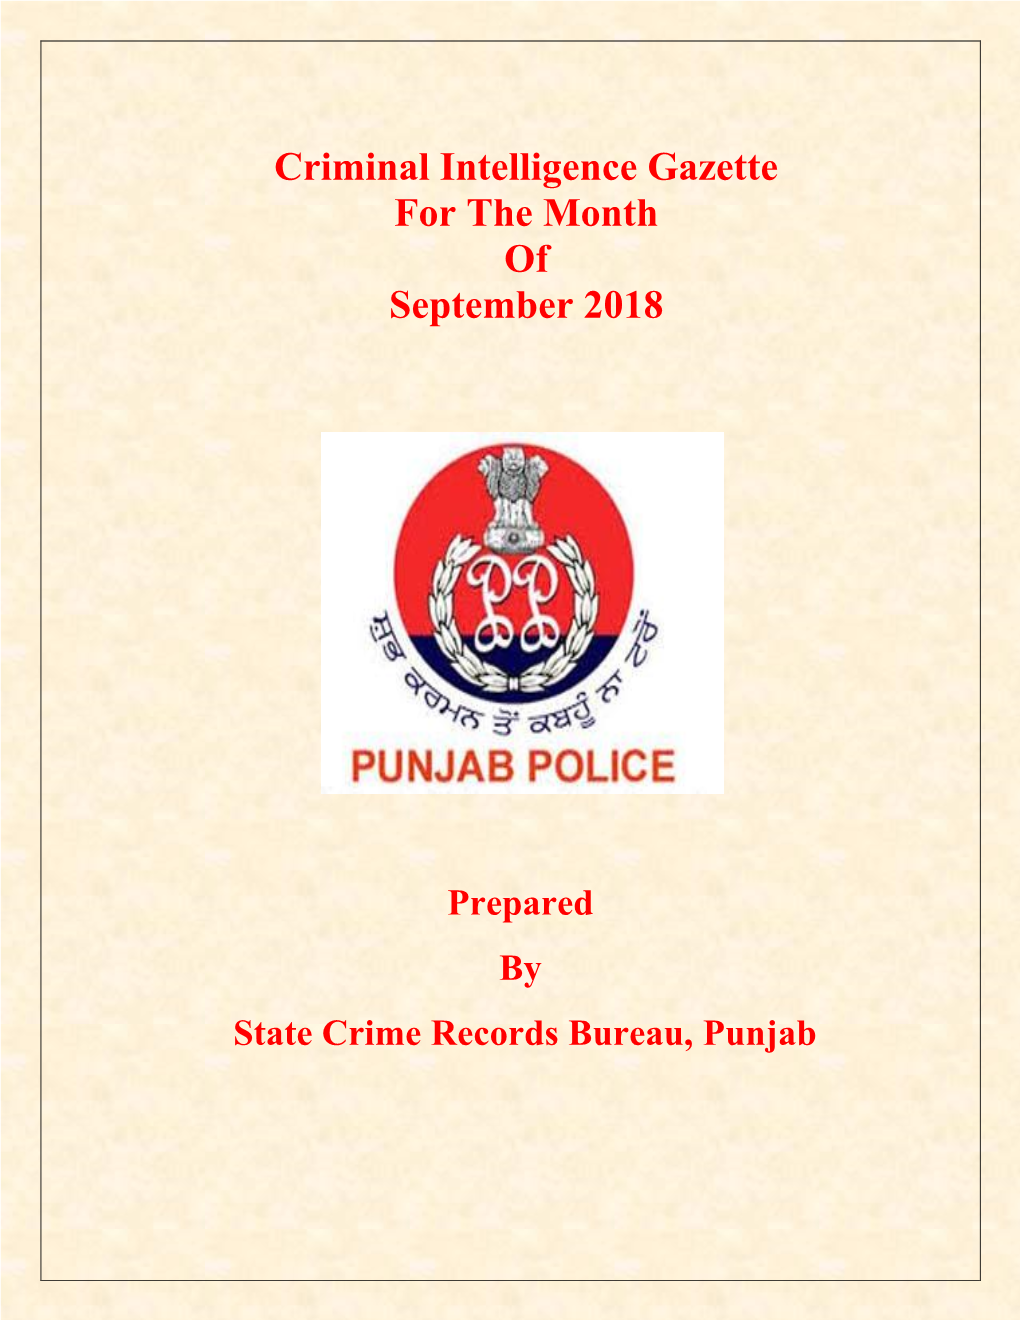 Criminal Intelligence Gazette for the Month of September 2018